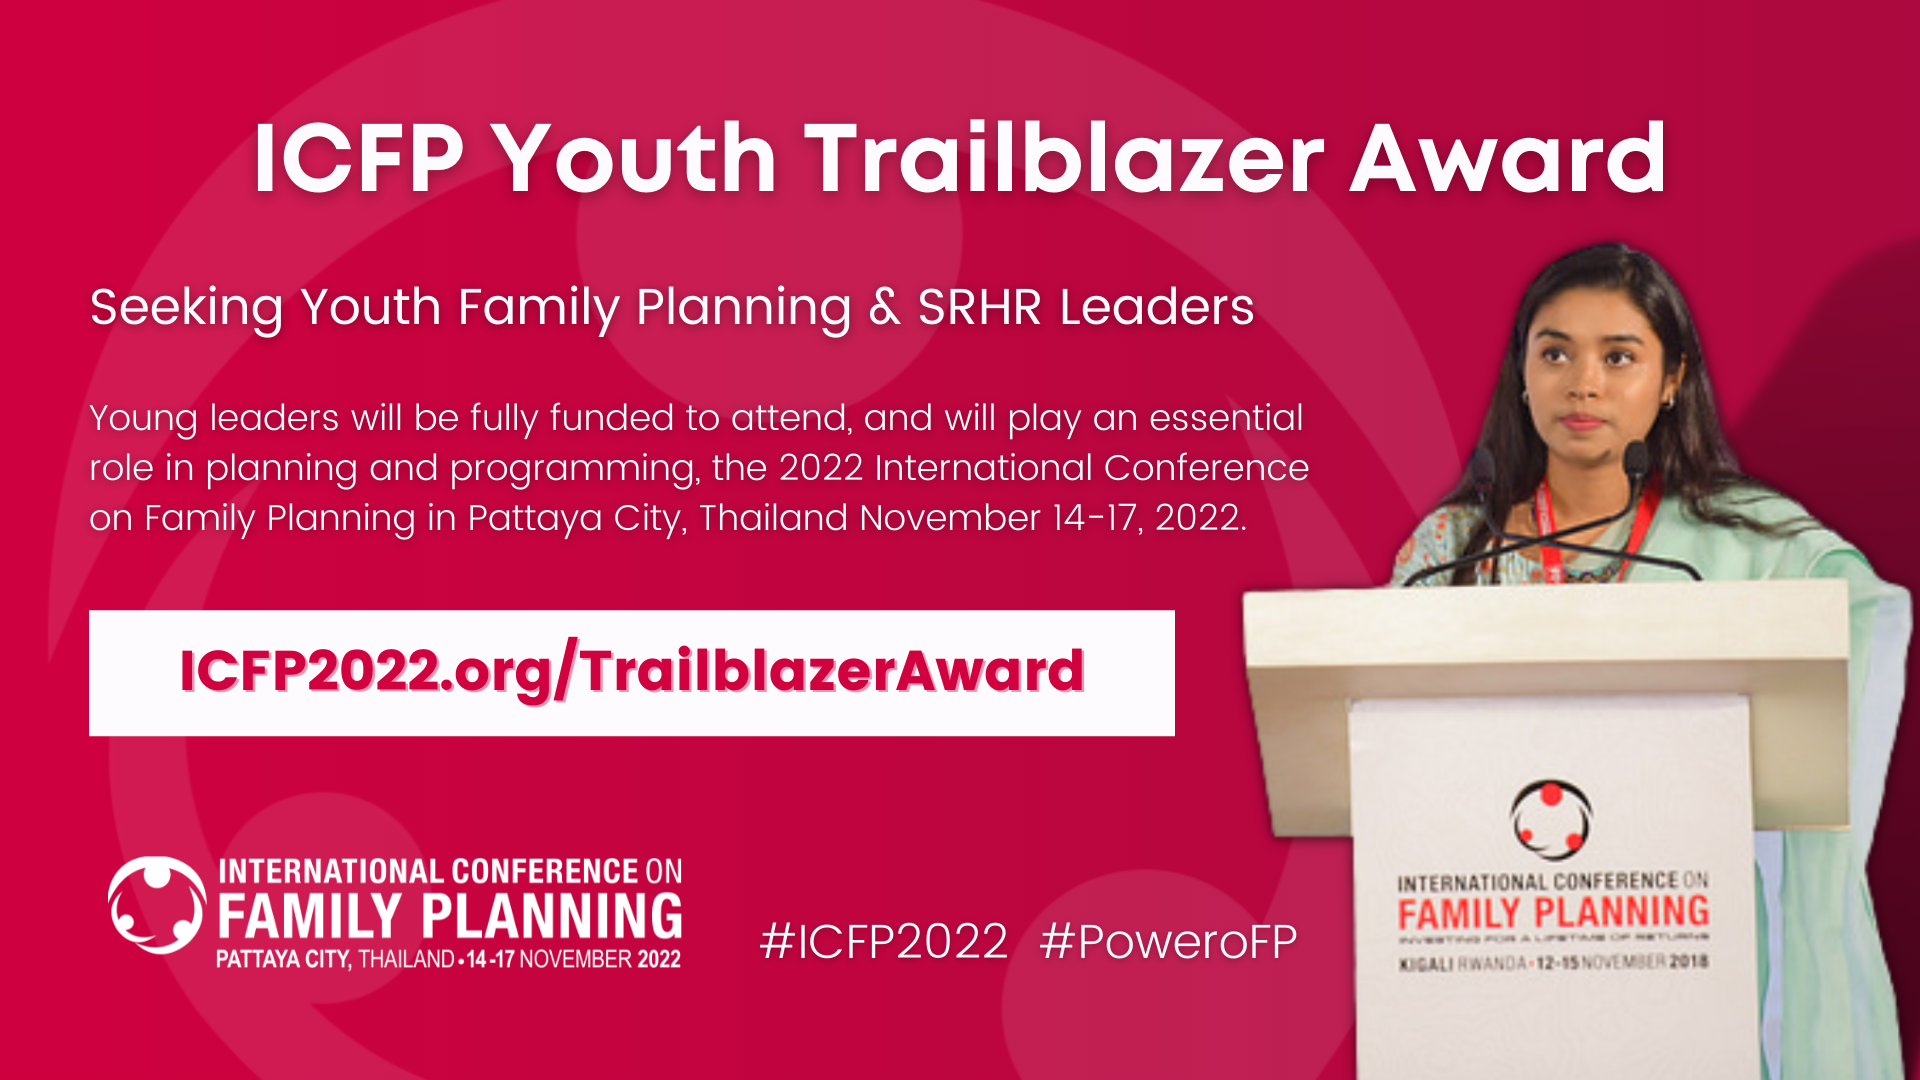 ICFP Youth Trailblazer Award to Open 1 November